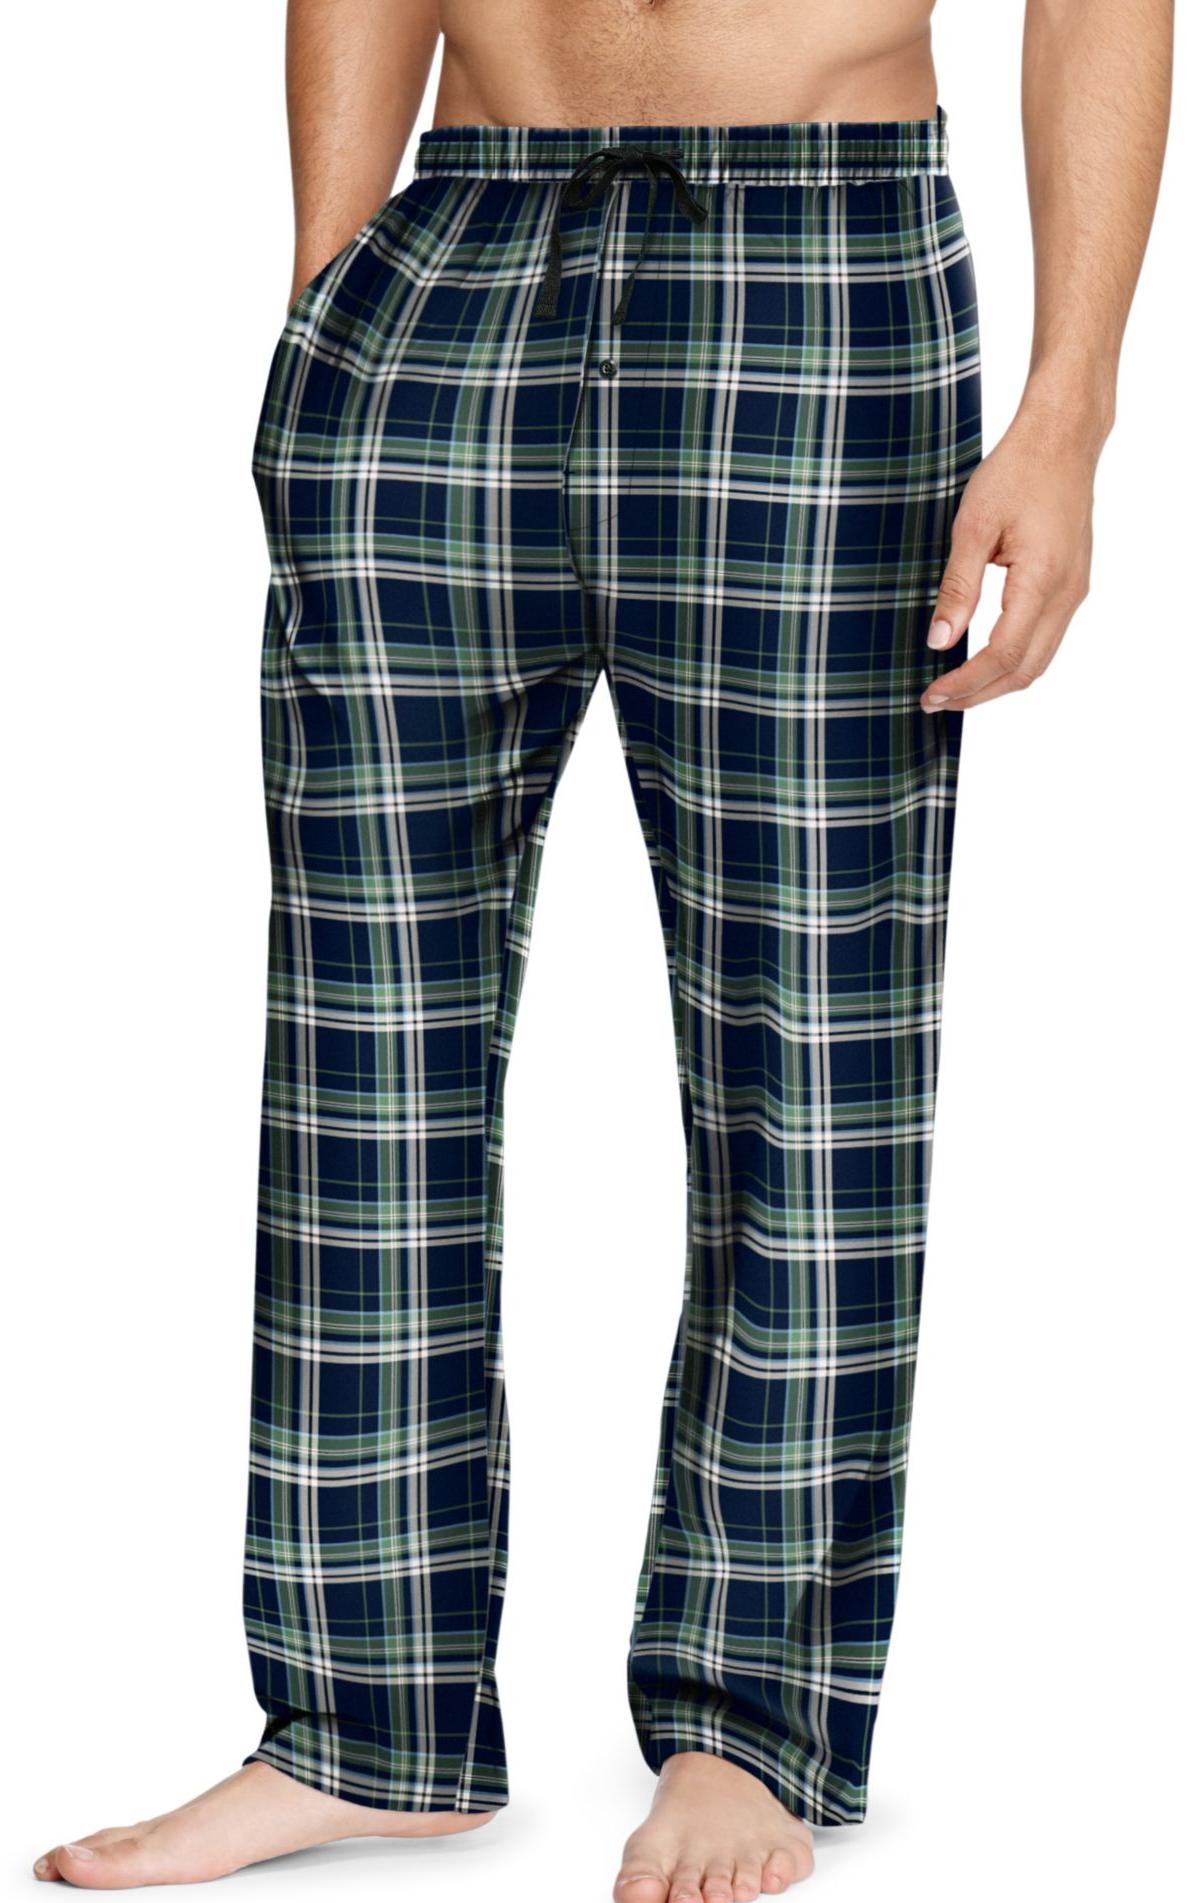 HANES Men's Flannel Pants with Comfort Flex Waistband - 02006/02006X | eBay